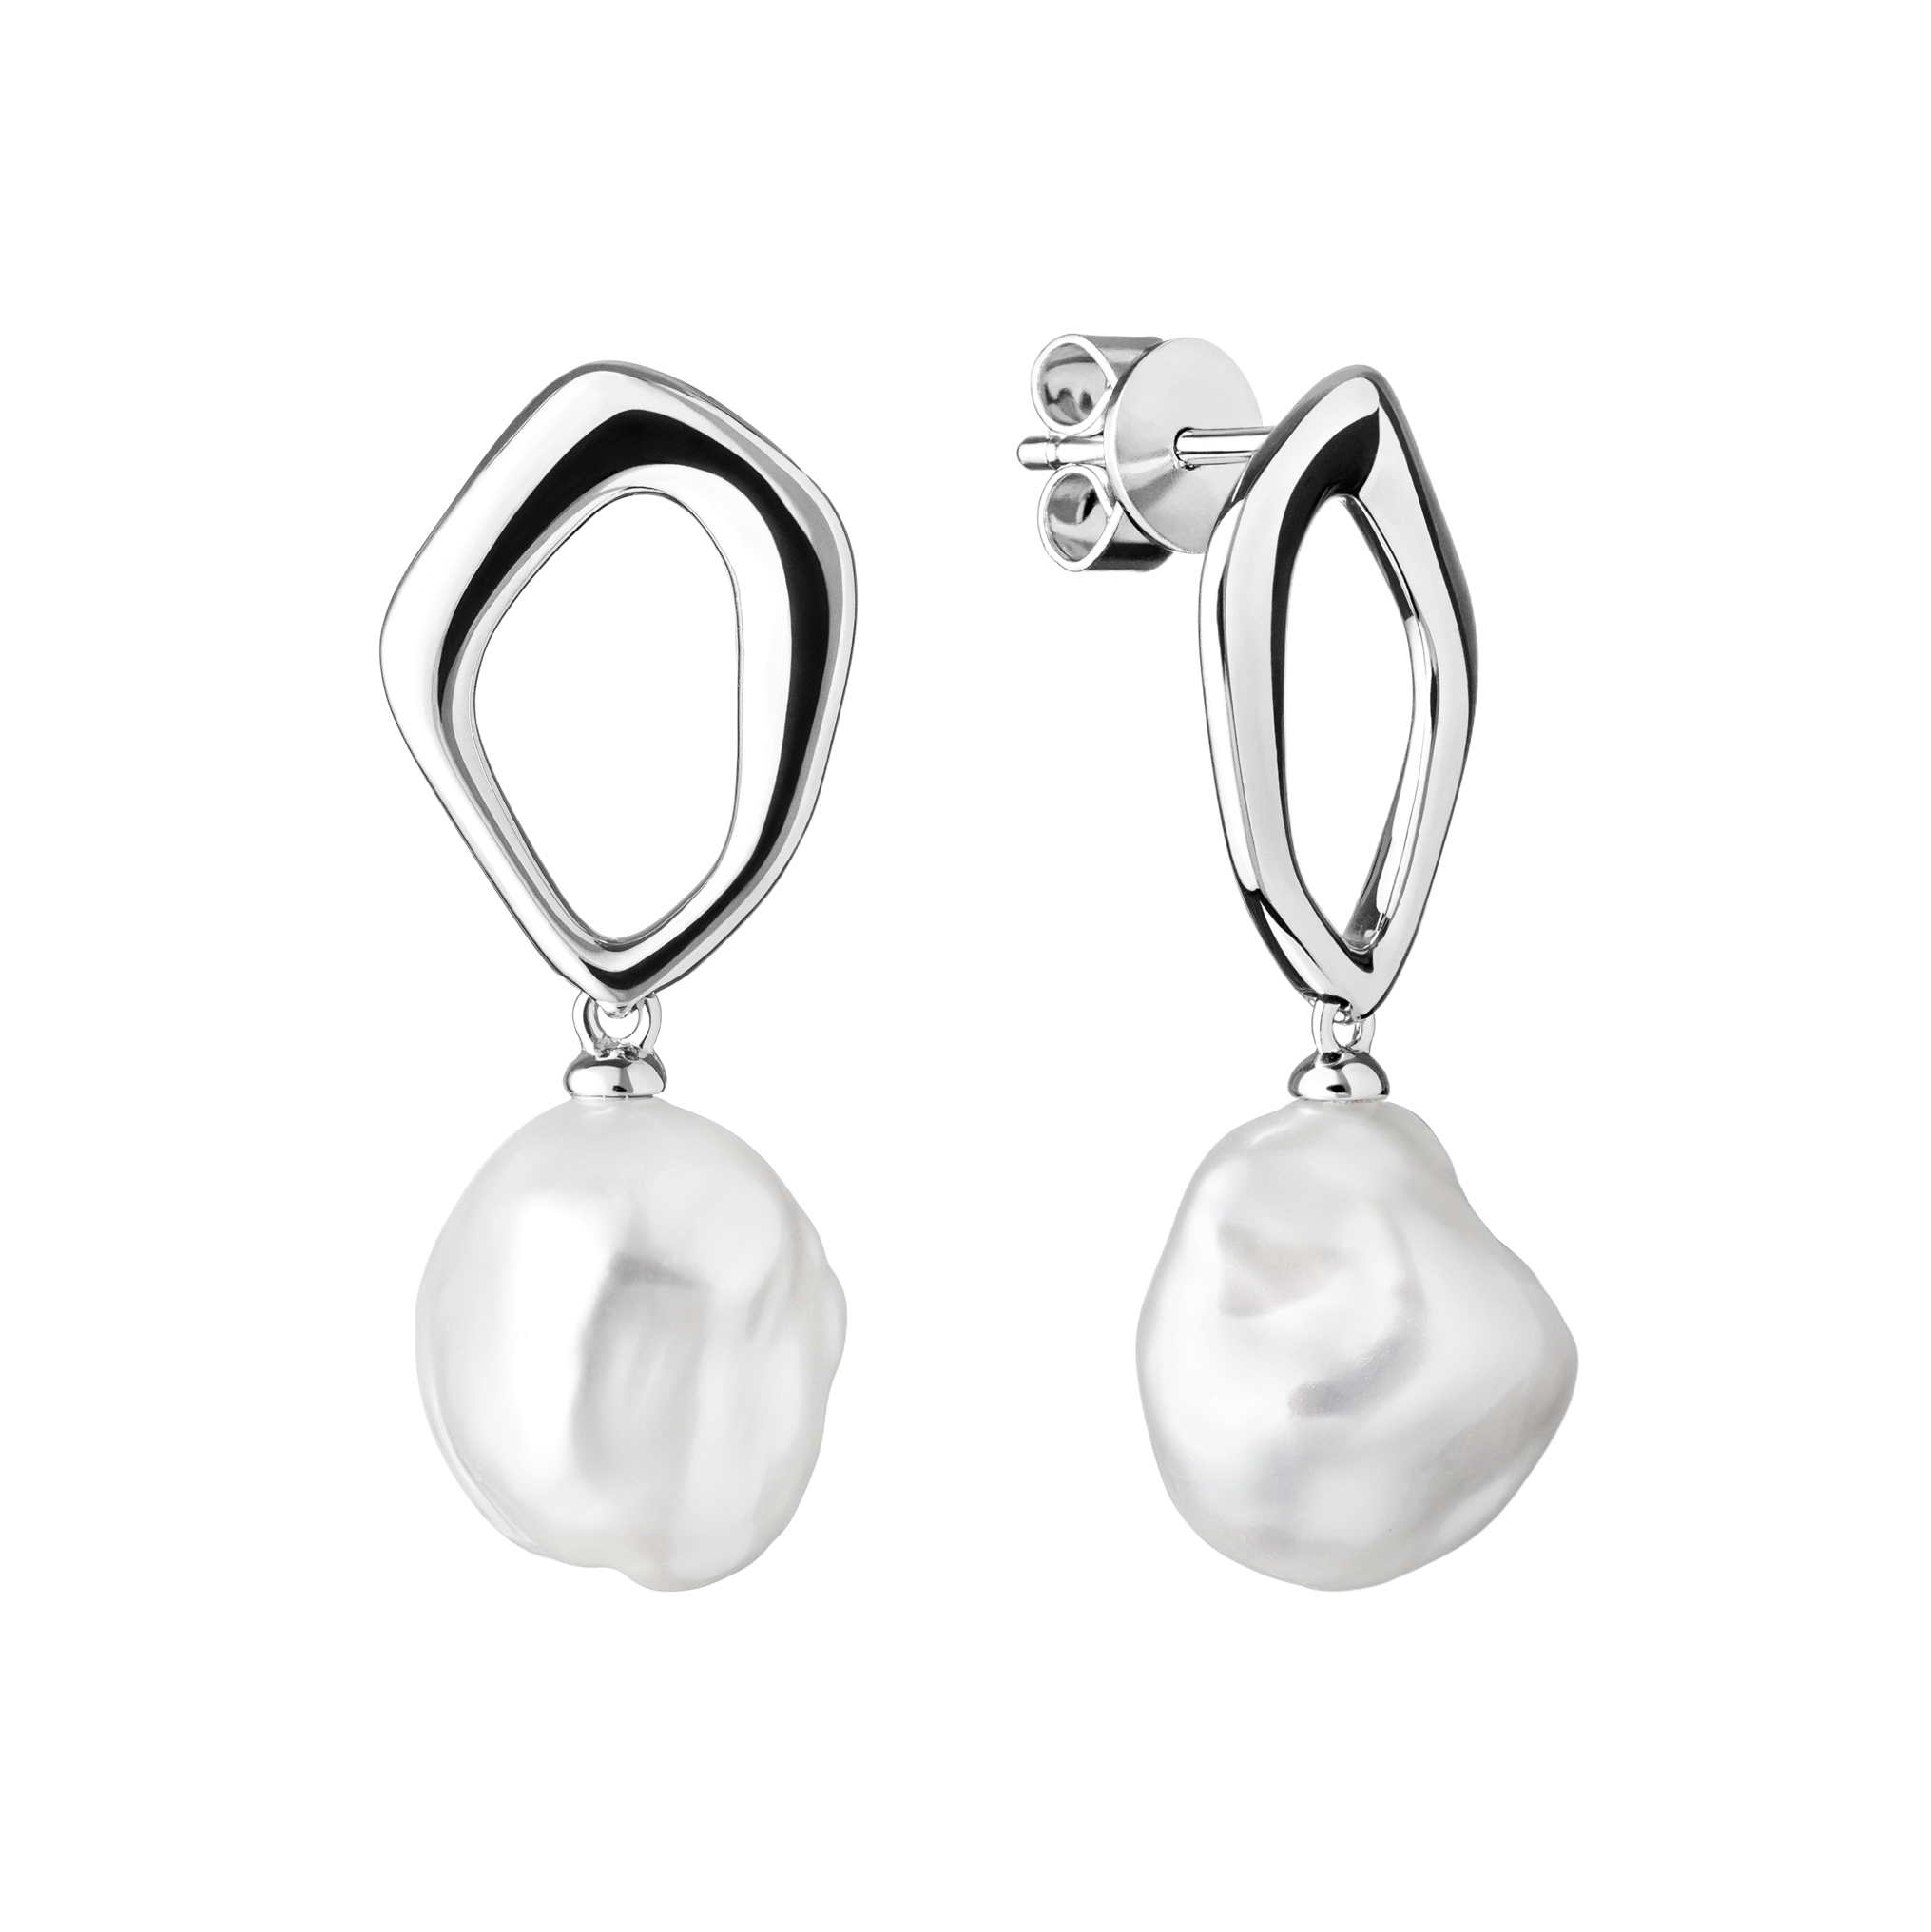 Perlové náušnice - nepravidelné prírodné perly